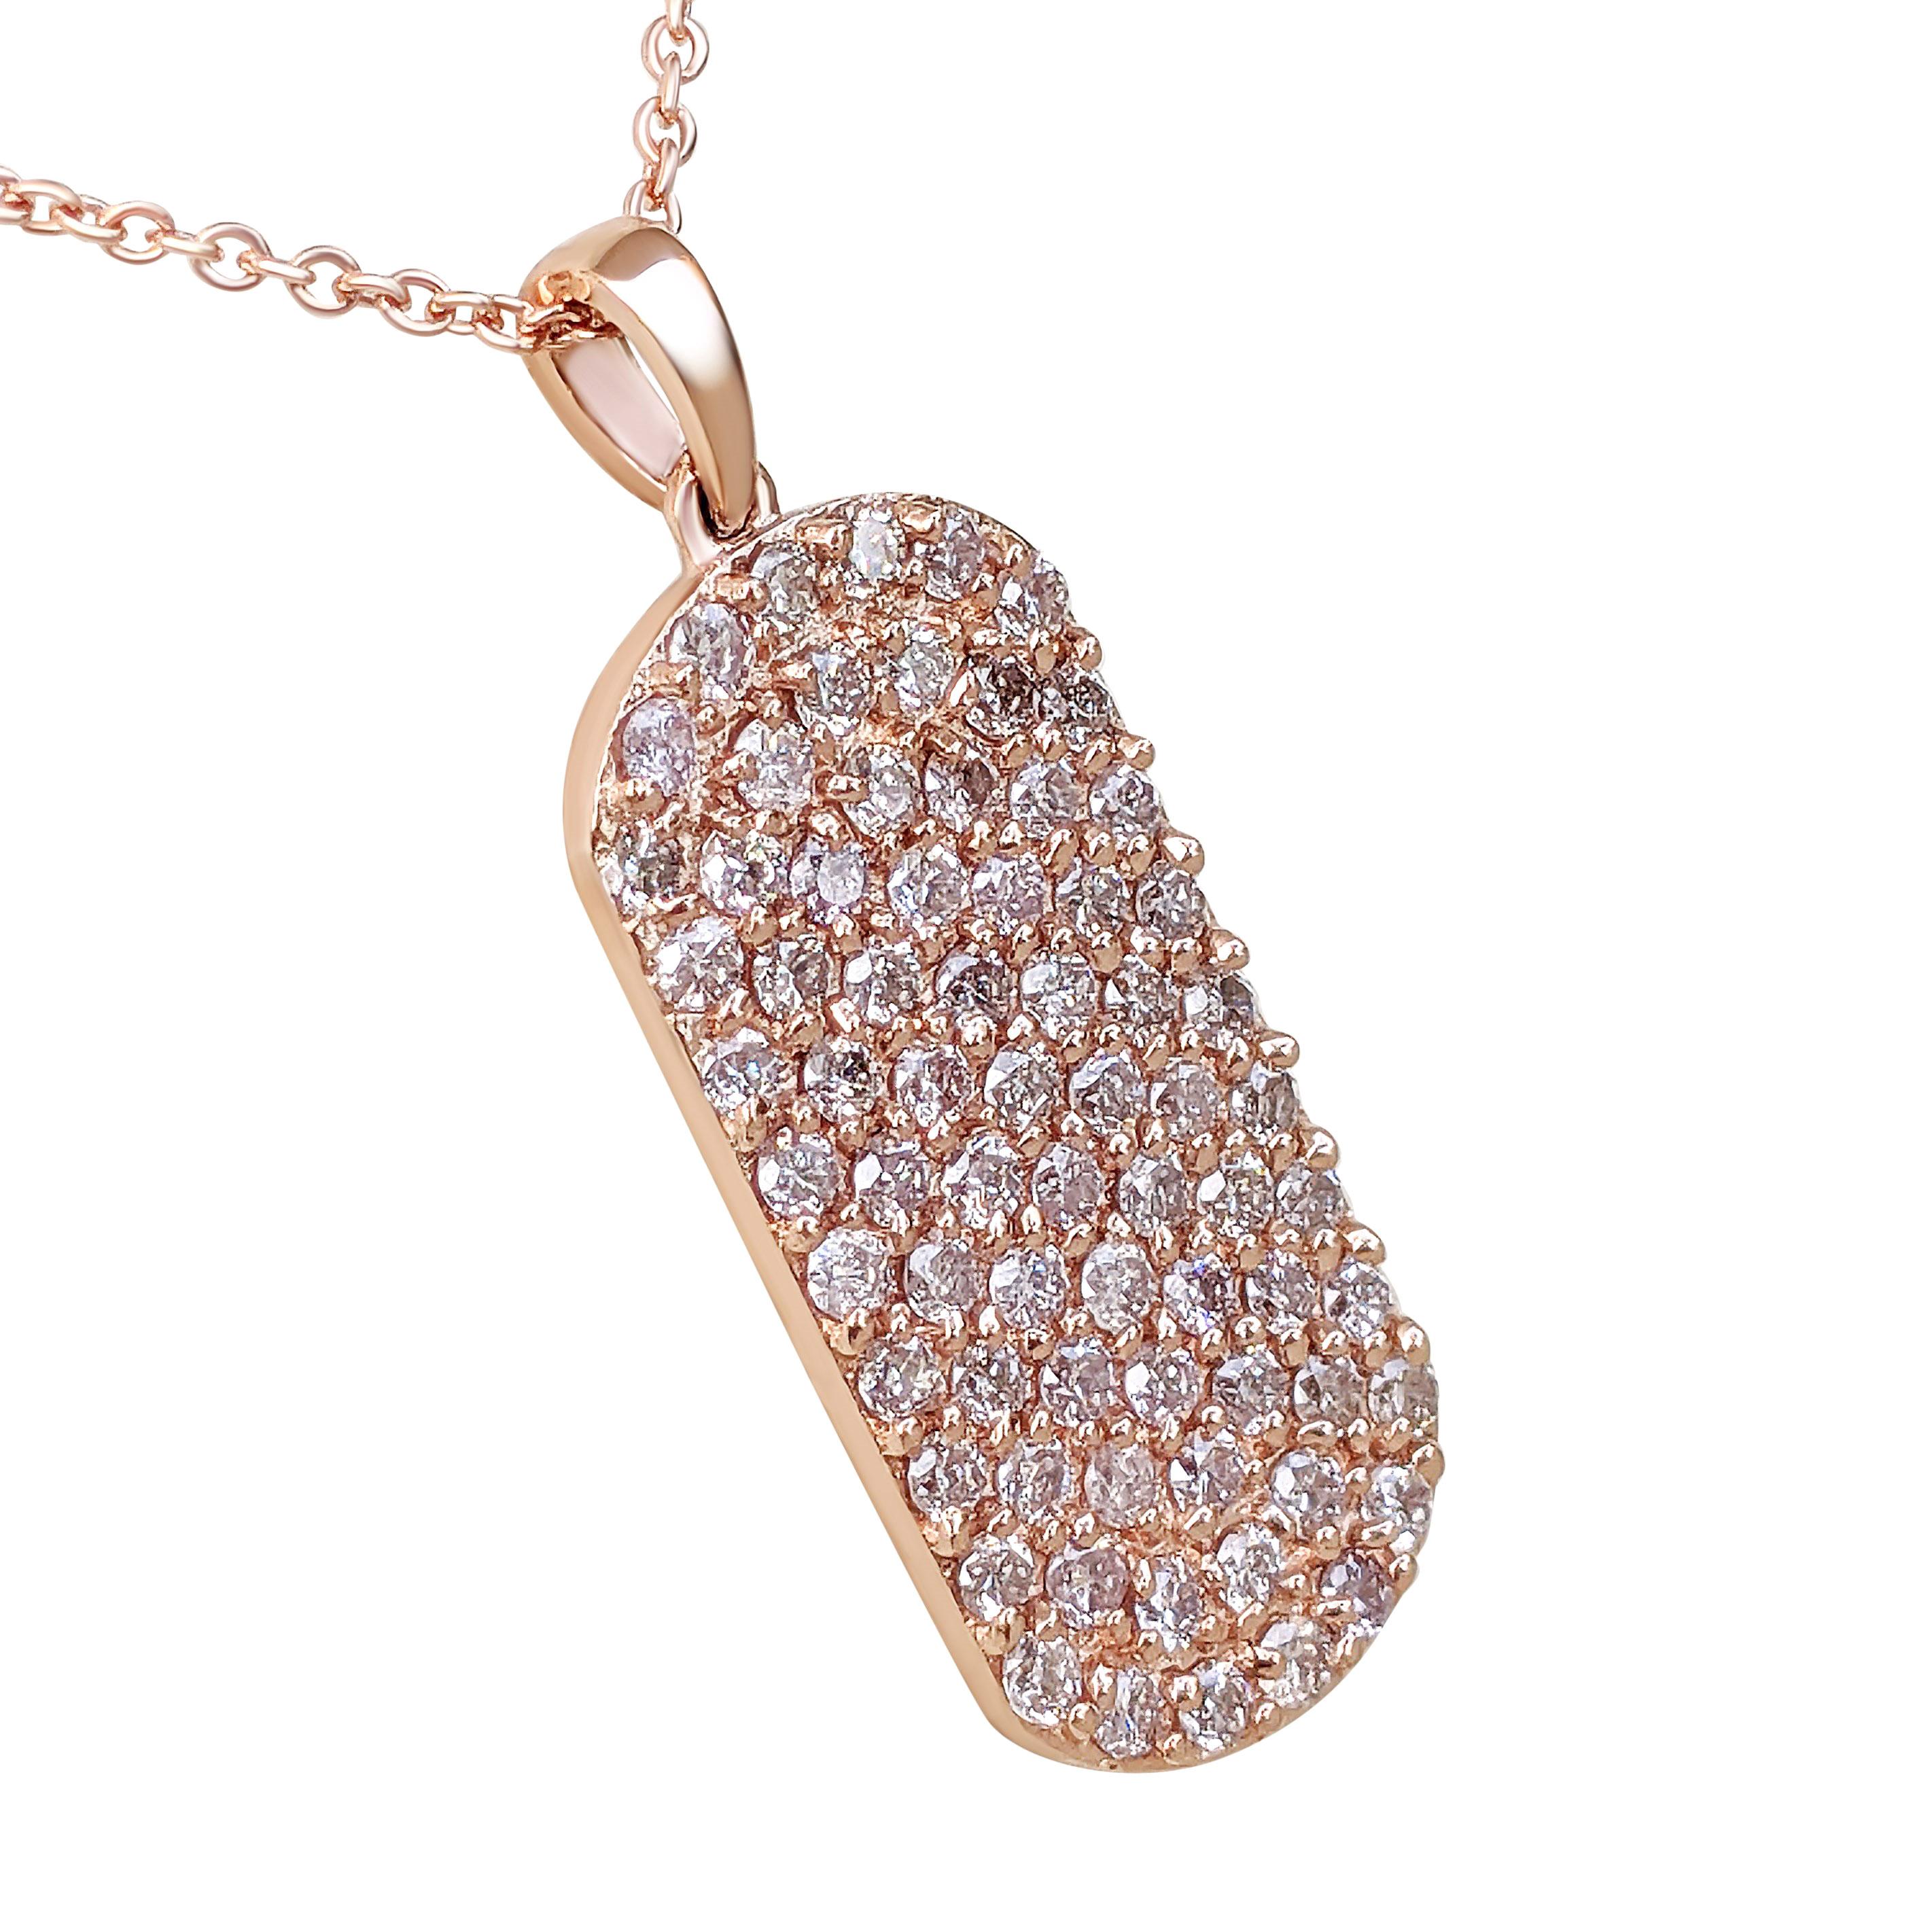 NO RESERVE! 1.10Ct Fancy Pink Diamond 14 kt. Gold Pendant Necklace For Sale 1